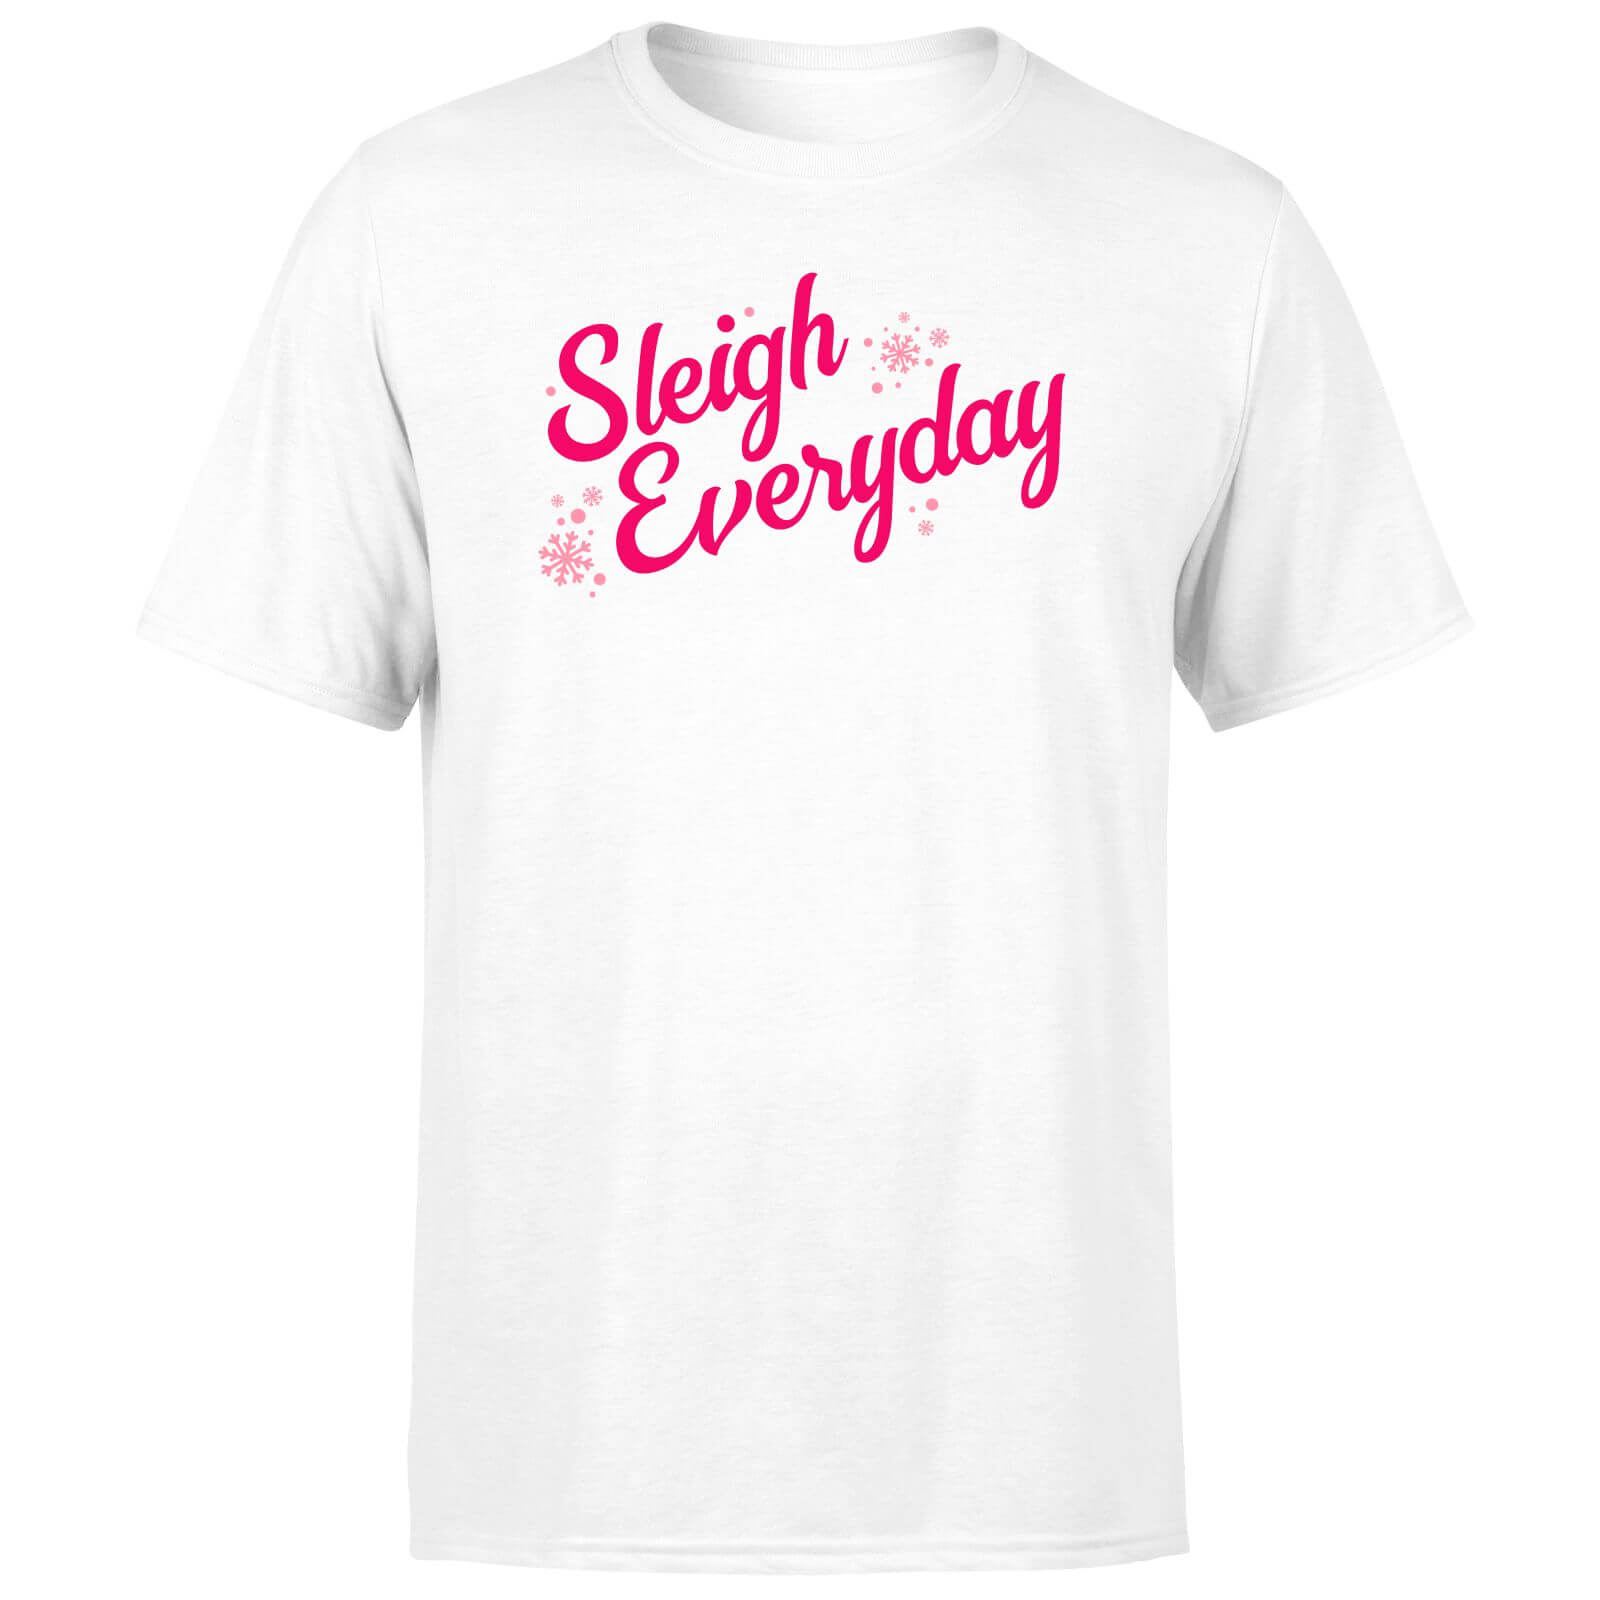 Snowy Sleigh Everyday Men's T-Shirt - White - XS - White